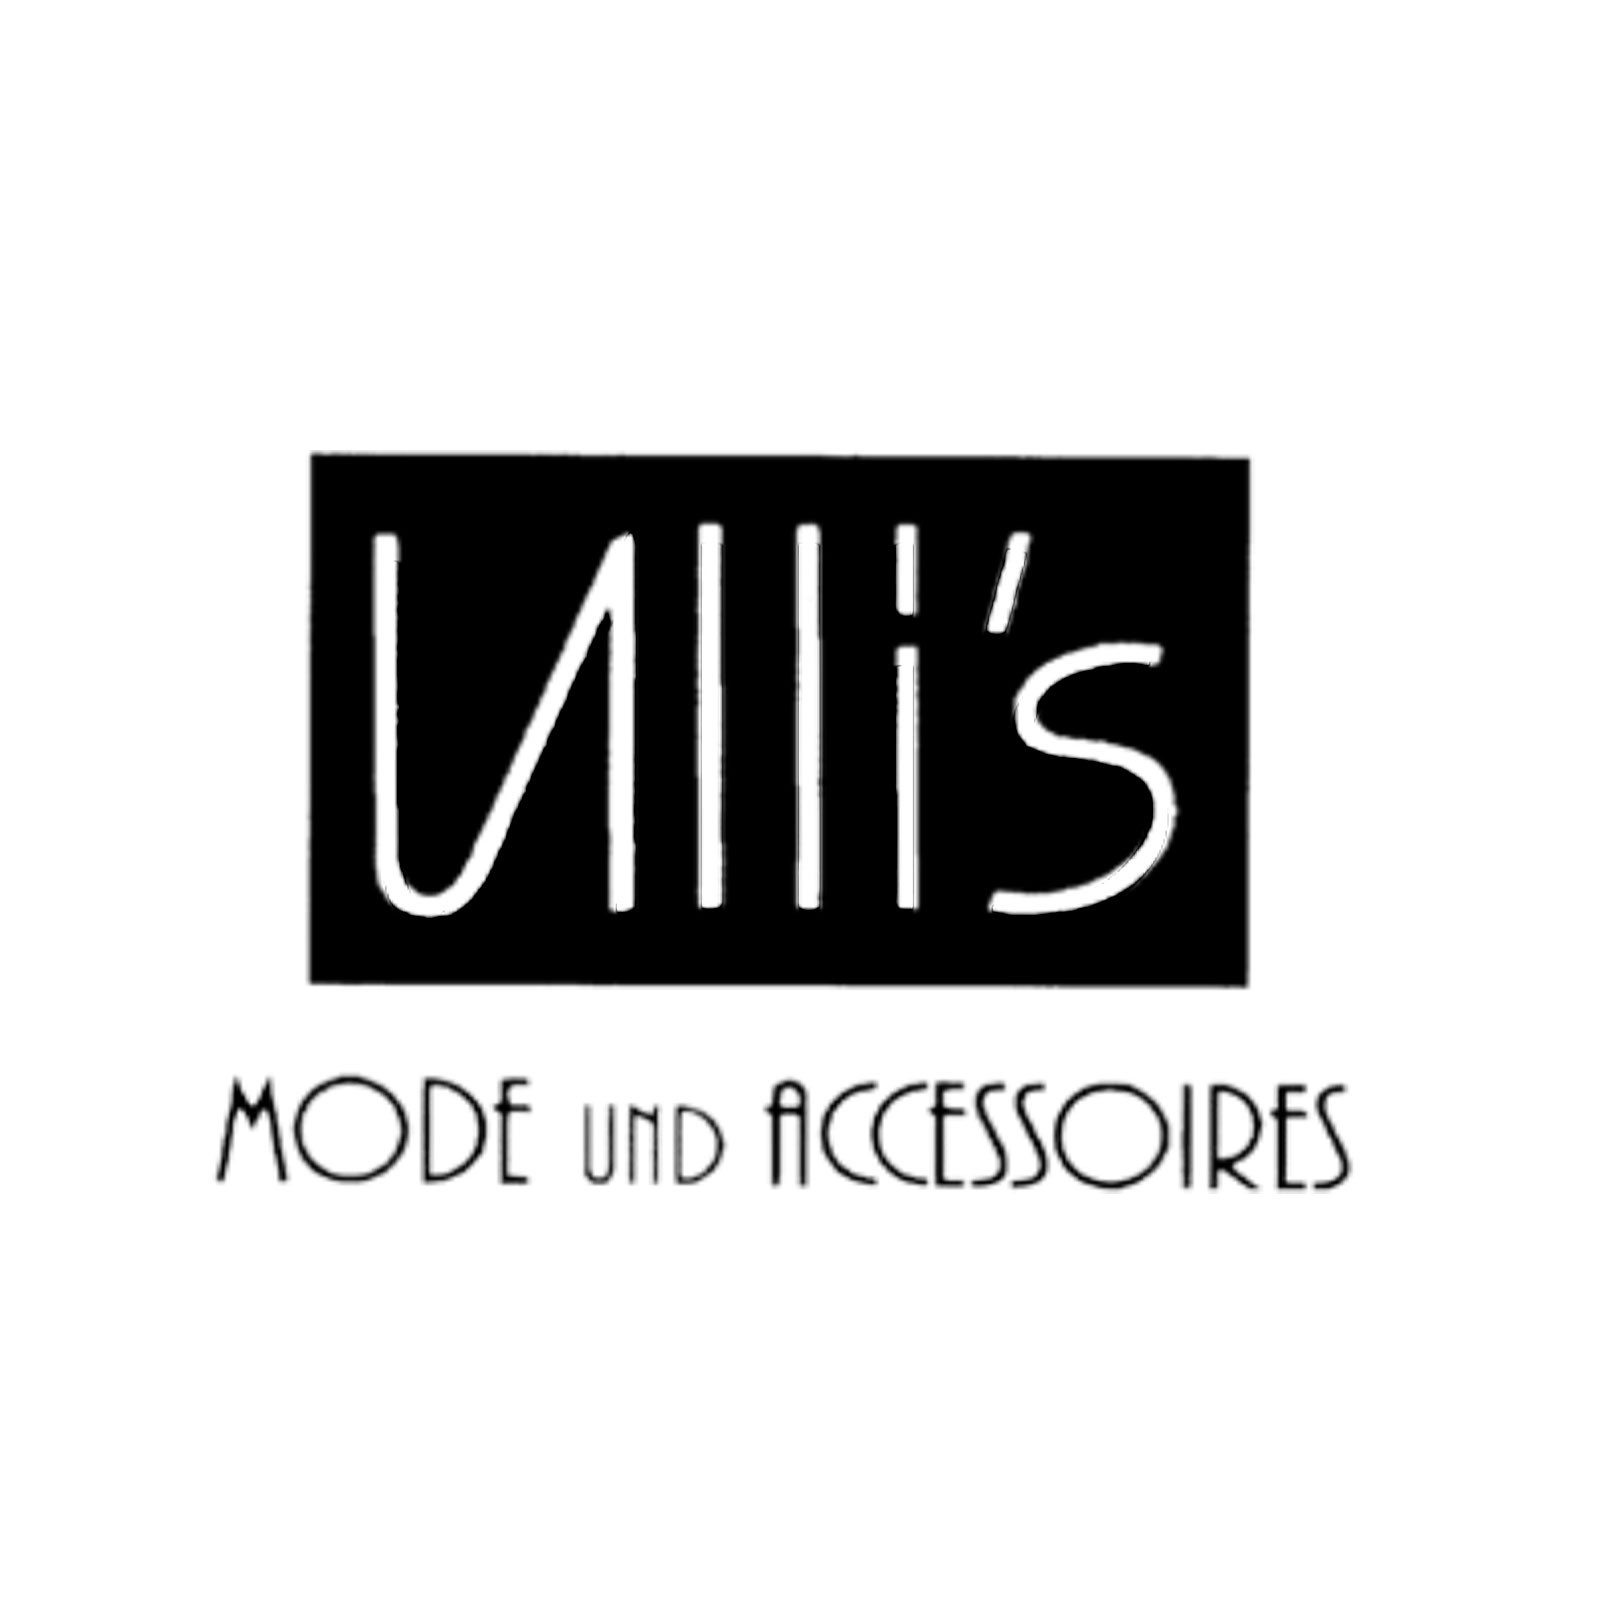 Ulli's Mode und Accessoires